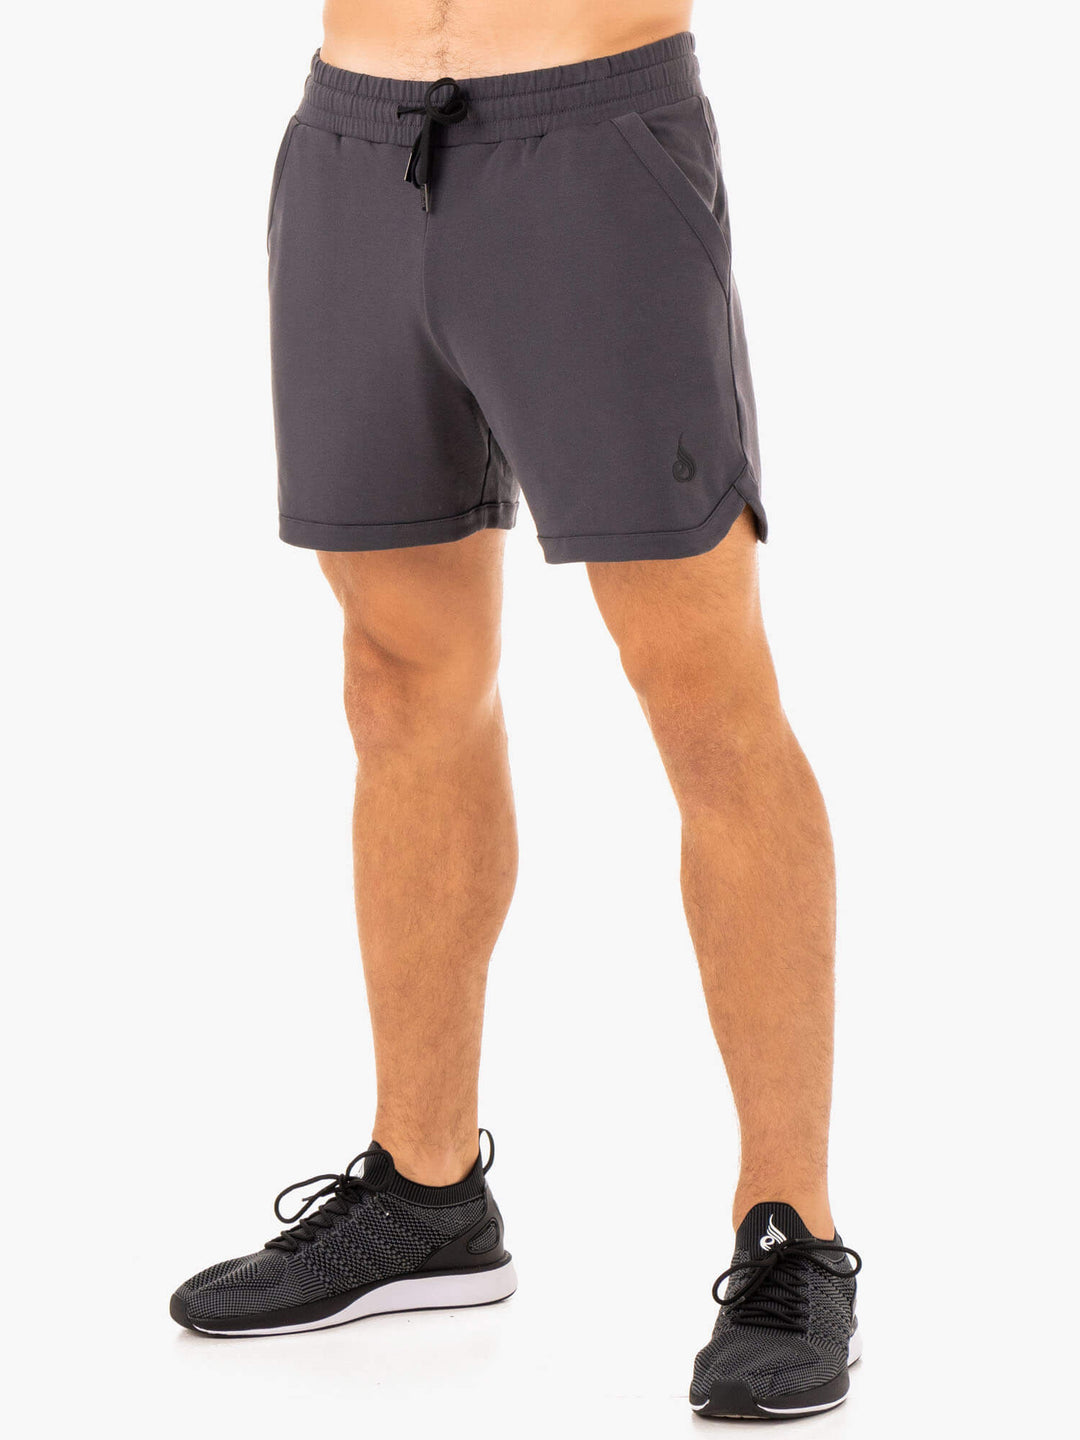 Optimal Gym Short - Charcoal Clothing Ryderwear 